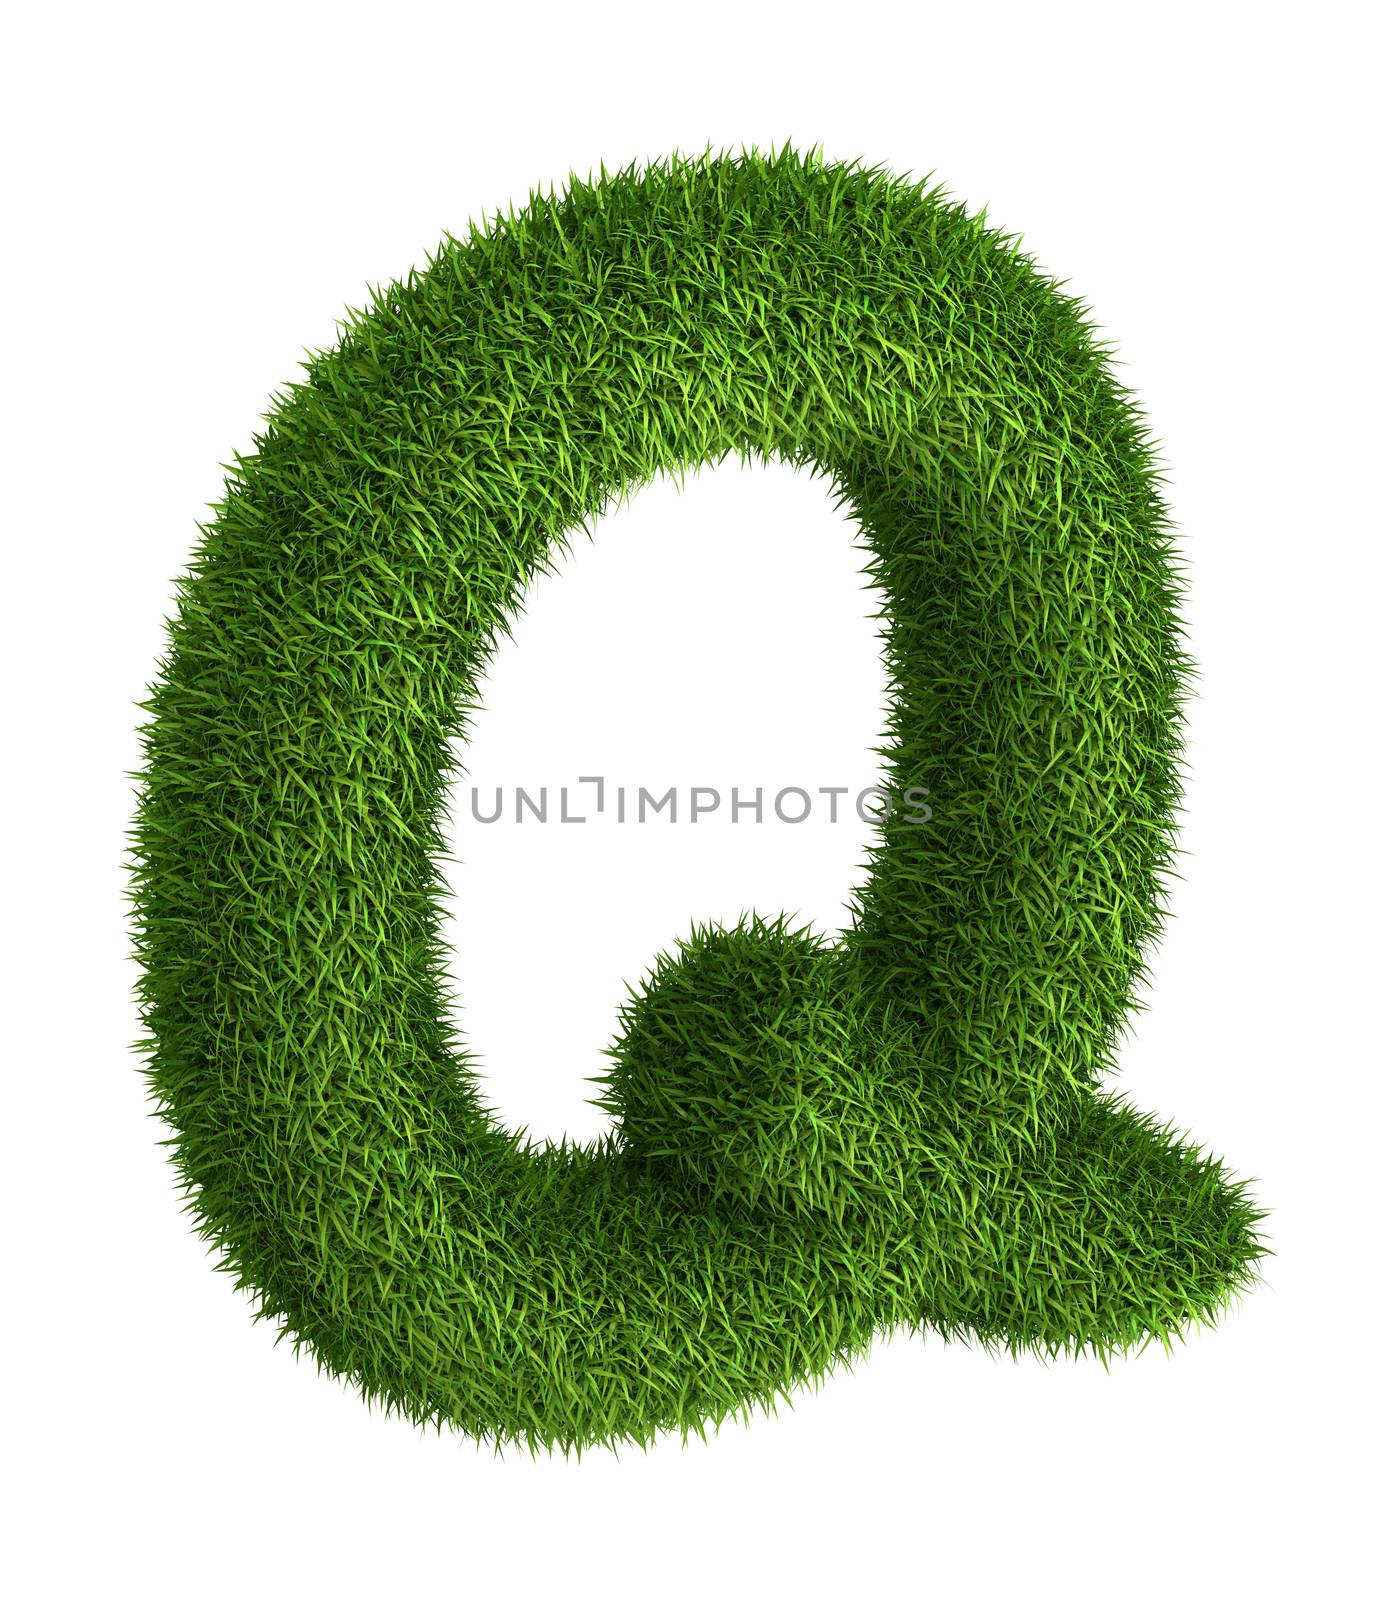 Natural grass letter Q by iunewind